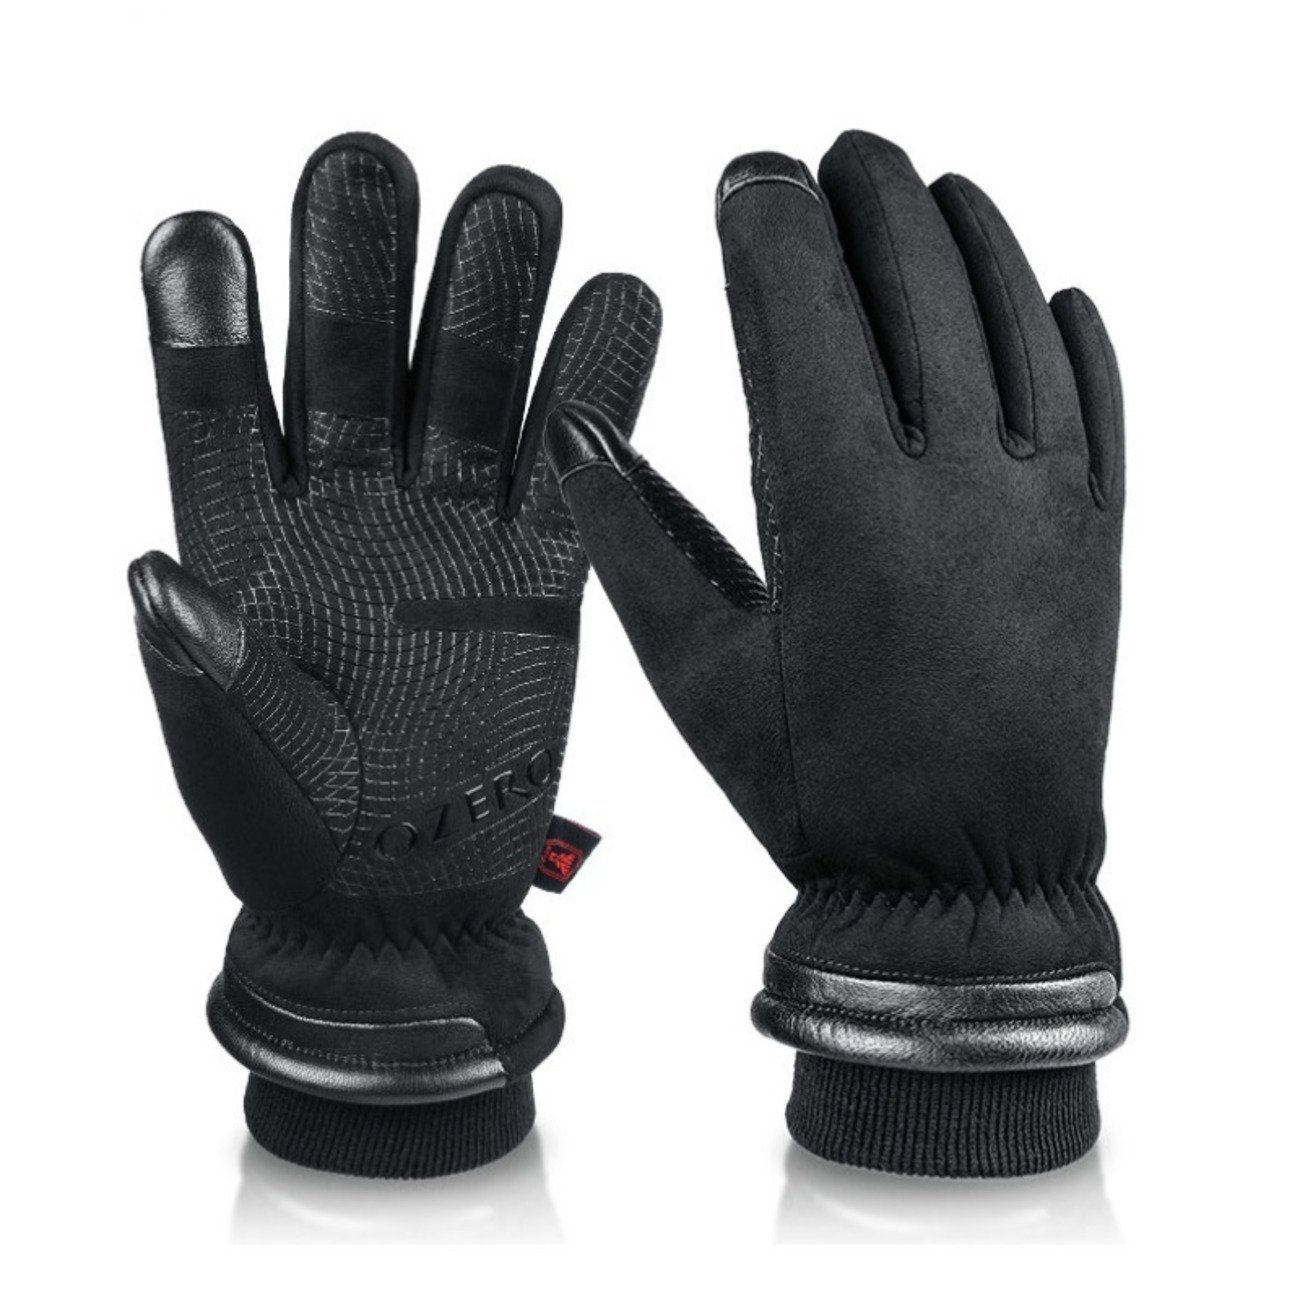 Union Reisen Reithandschuhe Winterwarme Sport-Rad-Touchscreen-Handschuhe